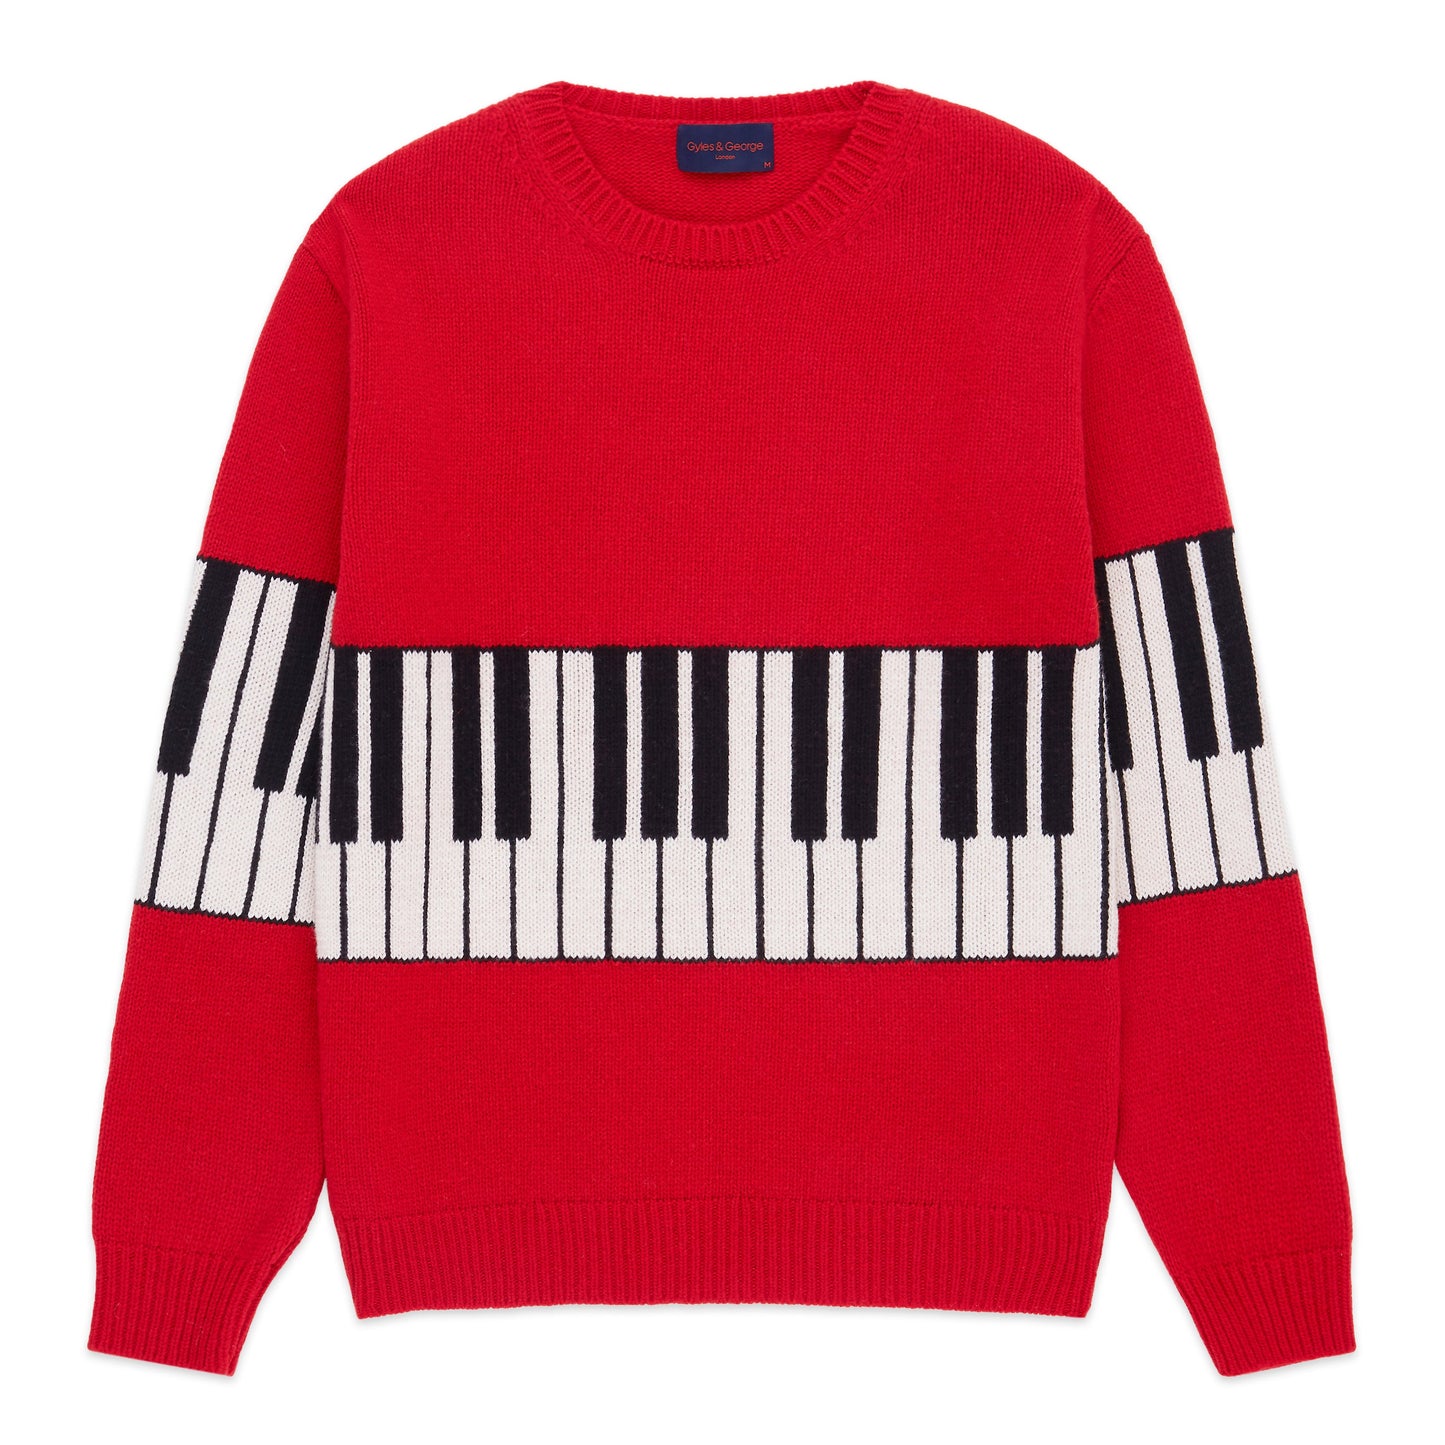 Gyles & George Men's Piano Sweater